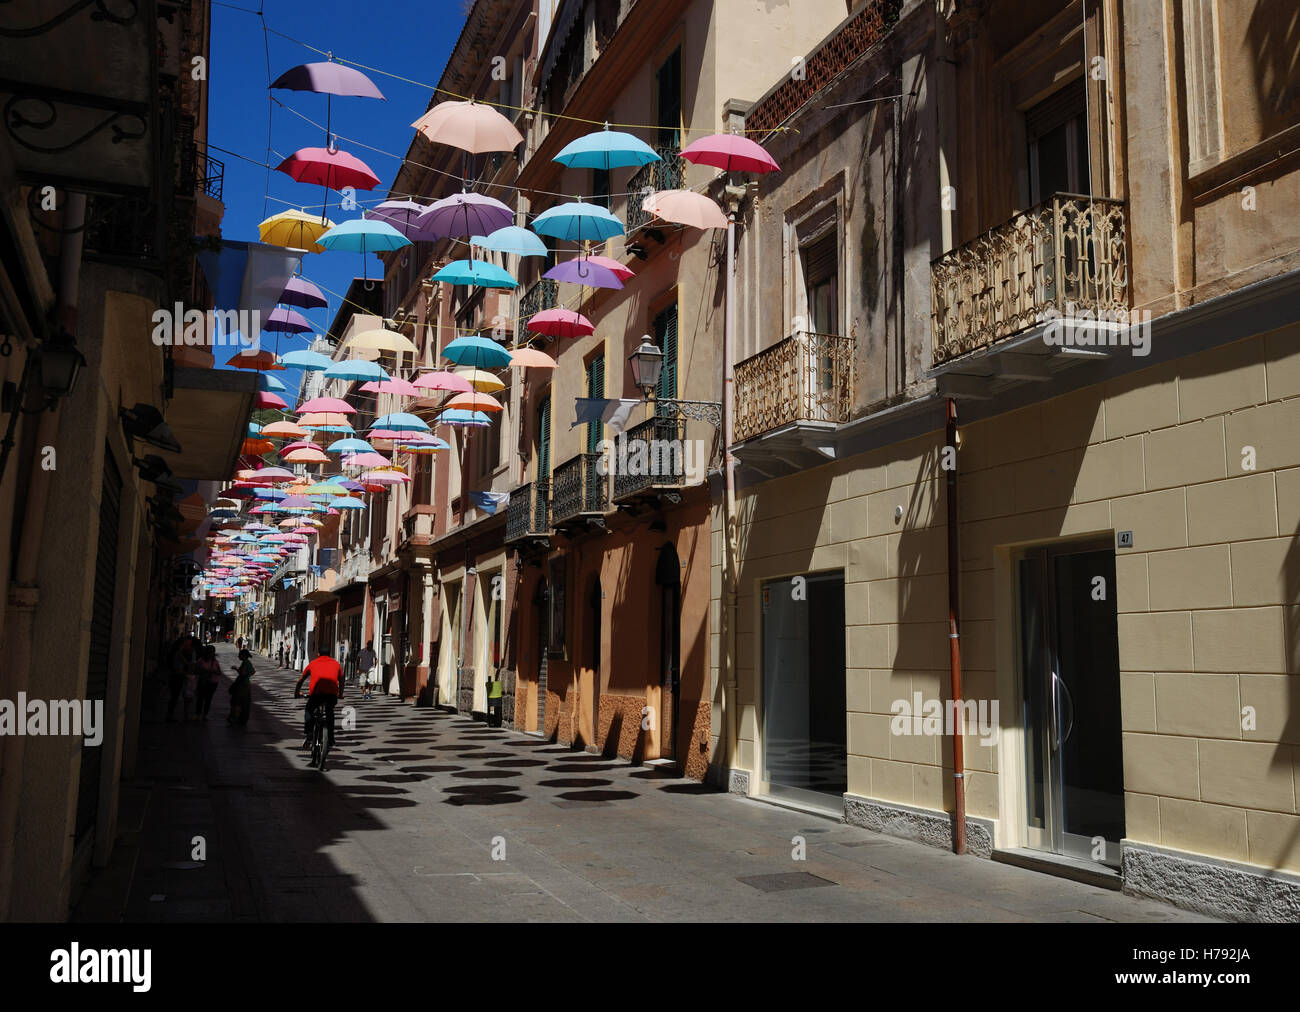 Strasse In Iglesias Sardinien Italien Stockfotografie Alamy